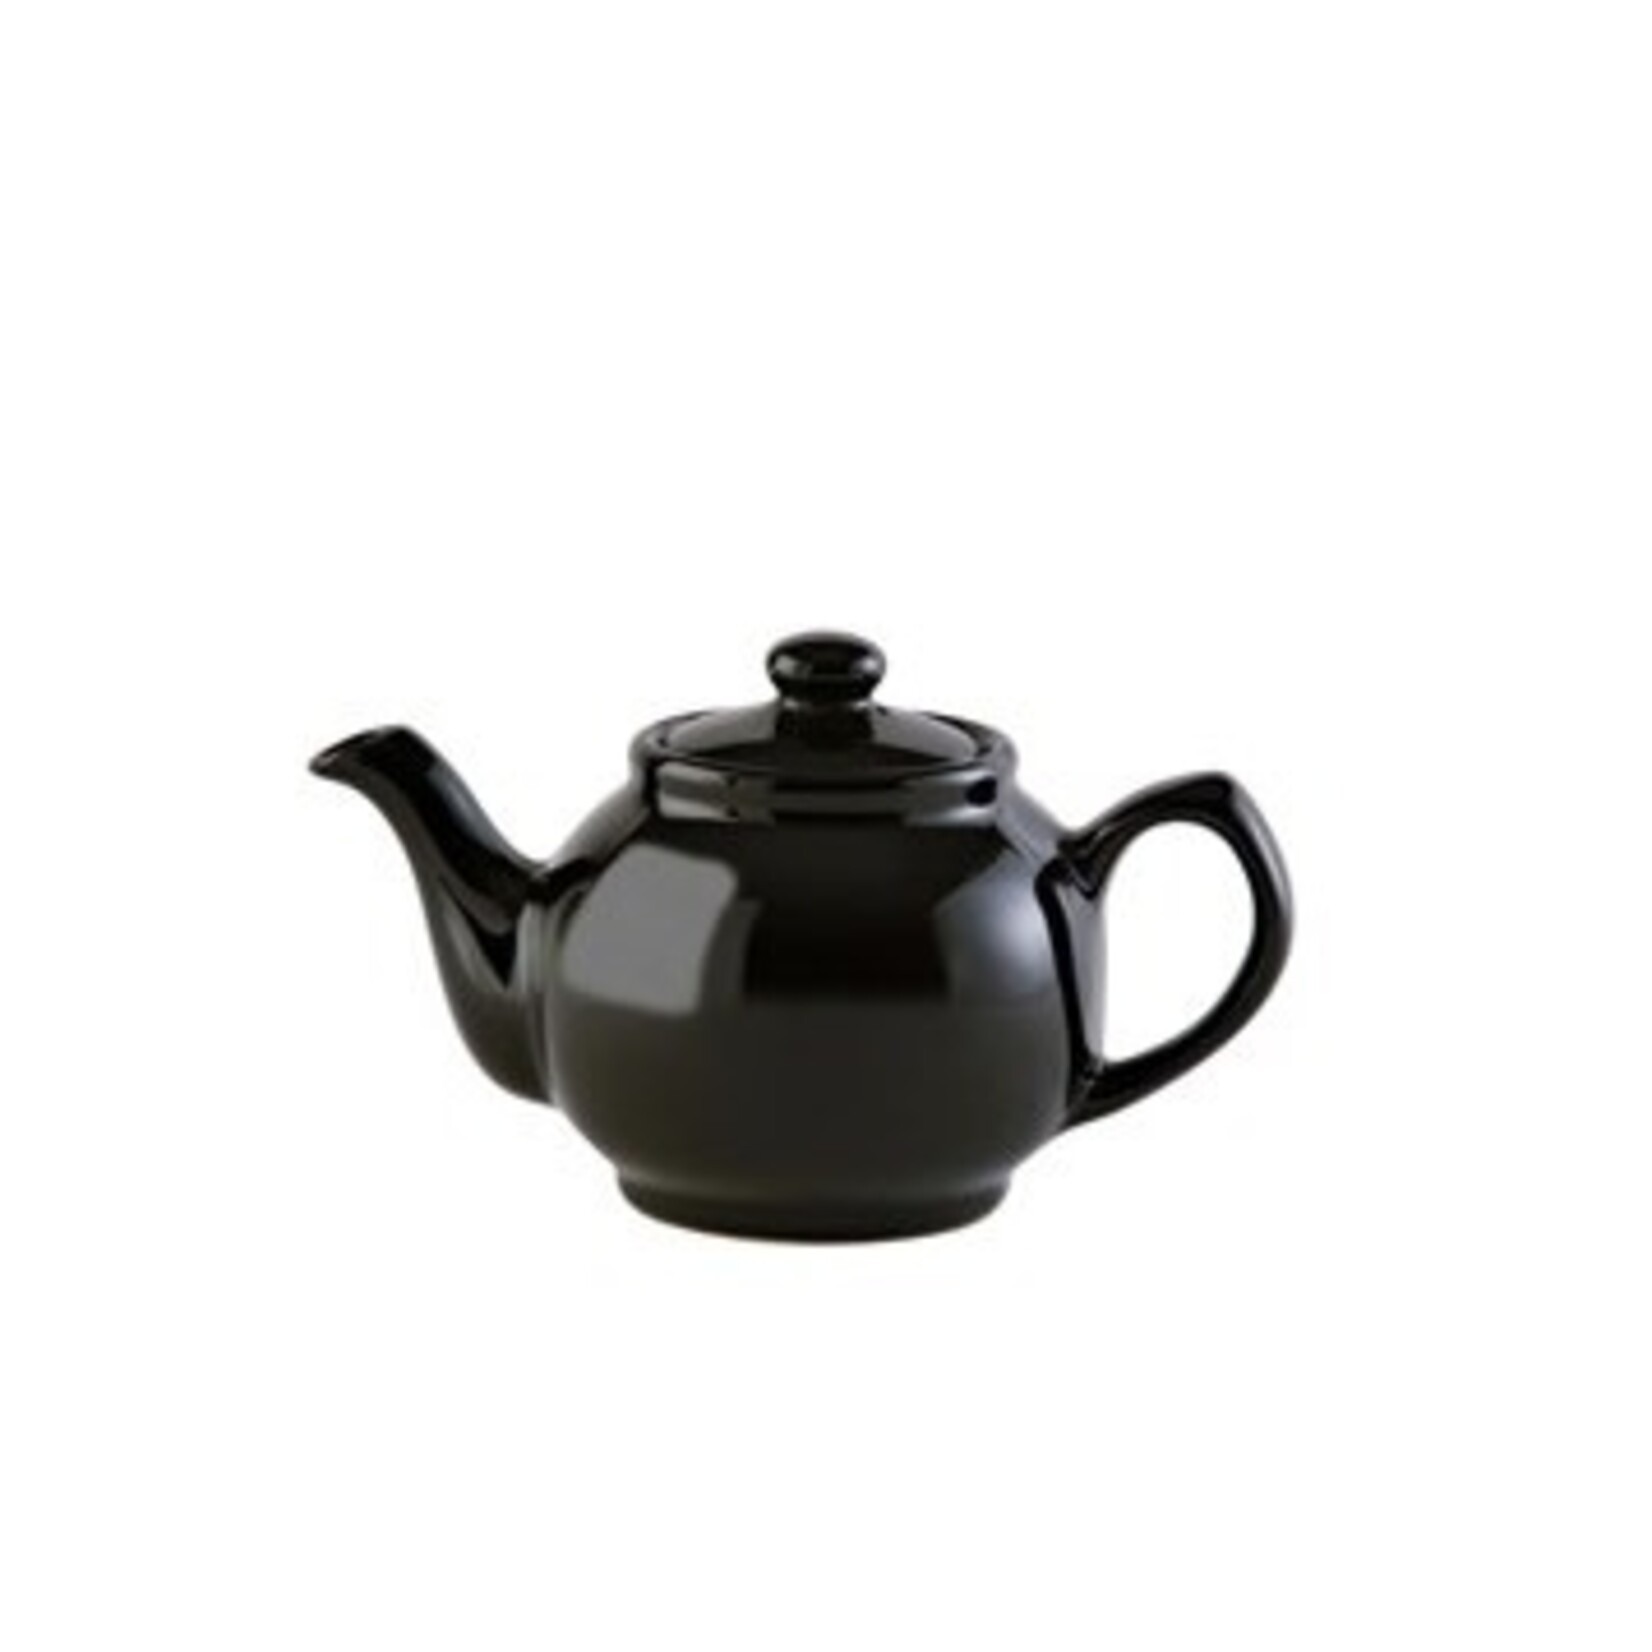 PRICE & KENSINGTON PRICE & KENSINGTON Classic Teapot 2 Cup Black